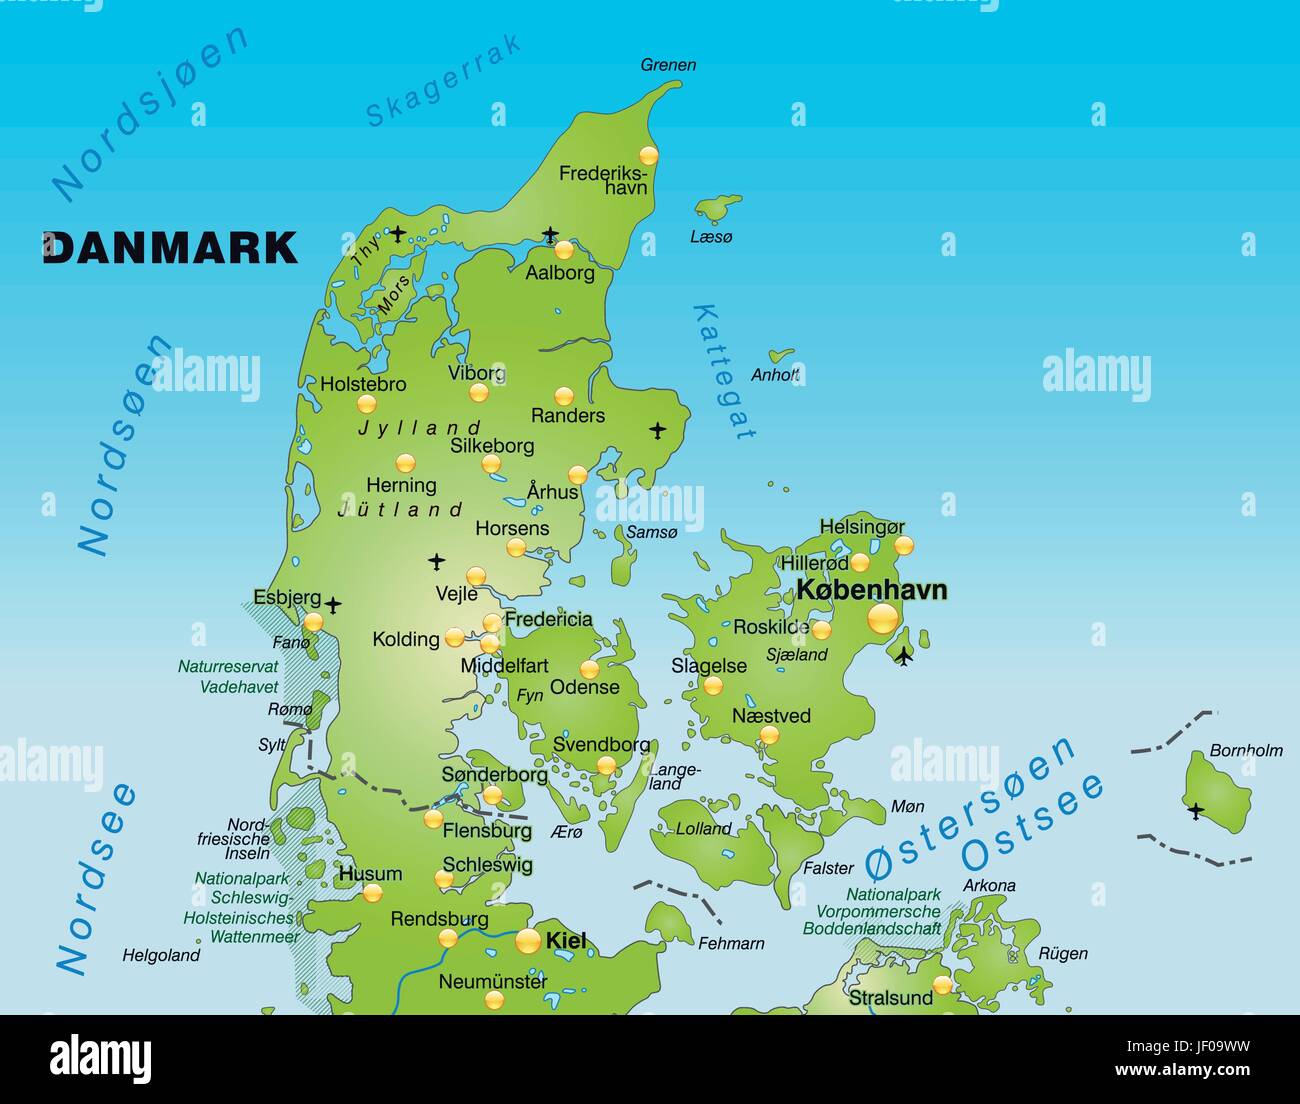 Karte, Atlas, Karte der Welt, Karte, Dänemark, Grenze, Karte, Synopse